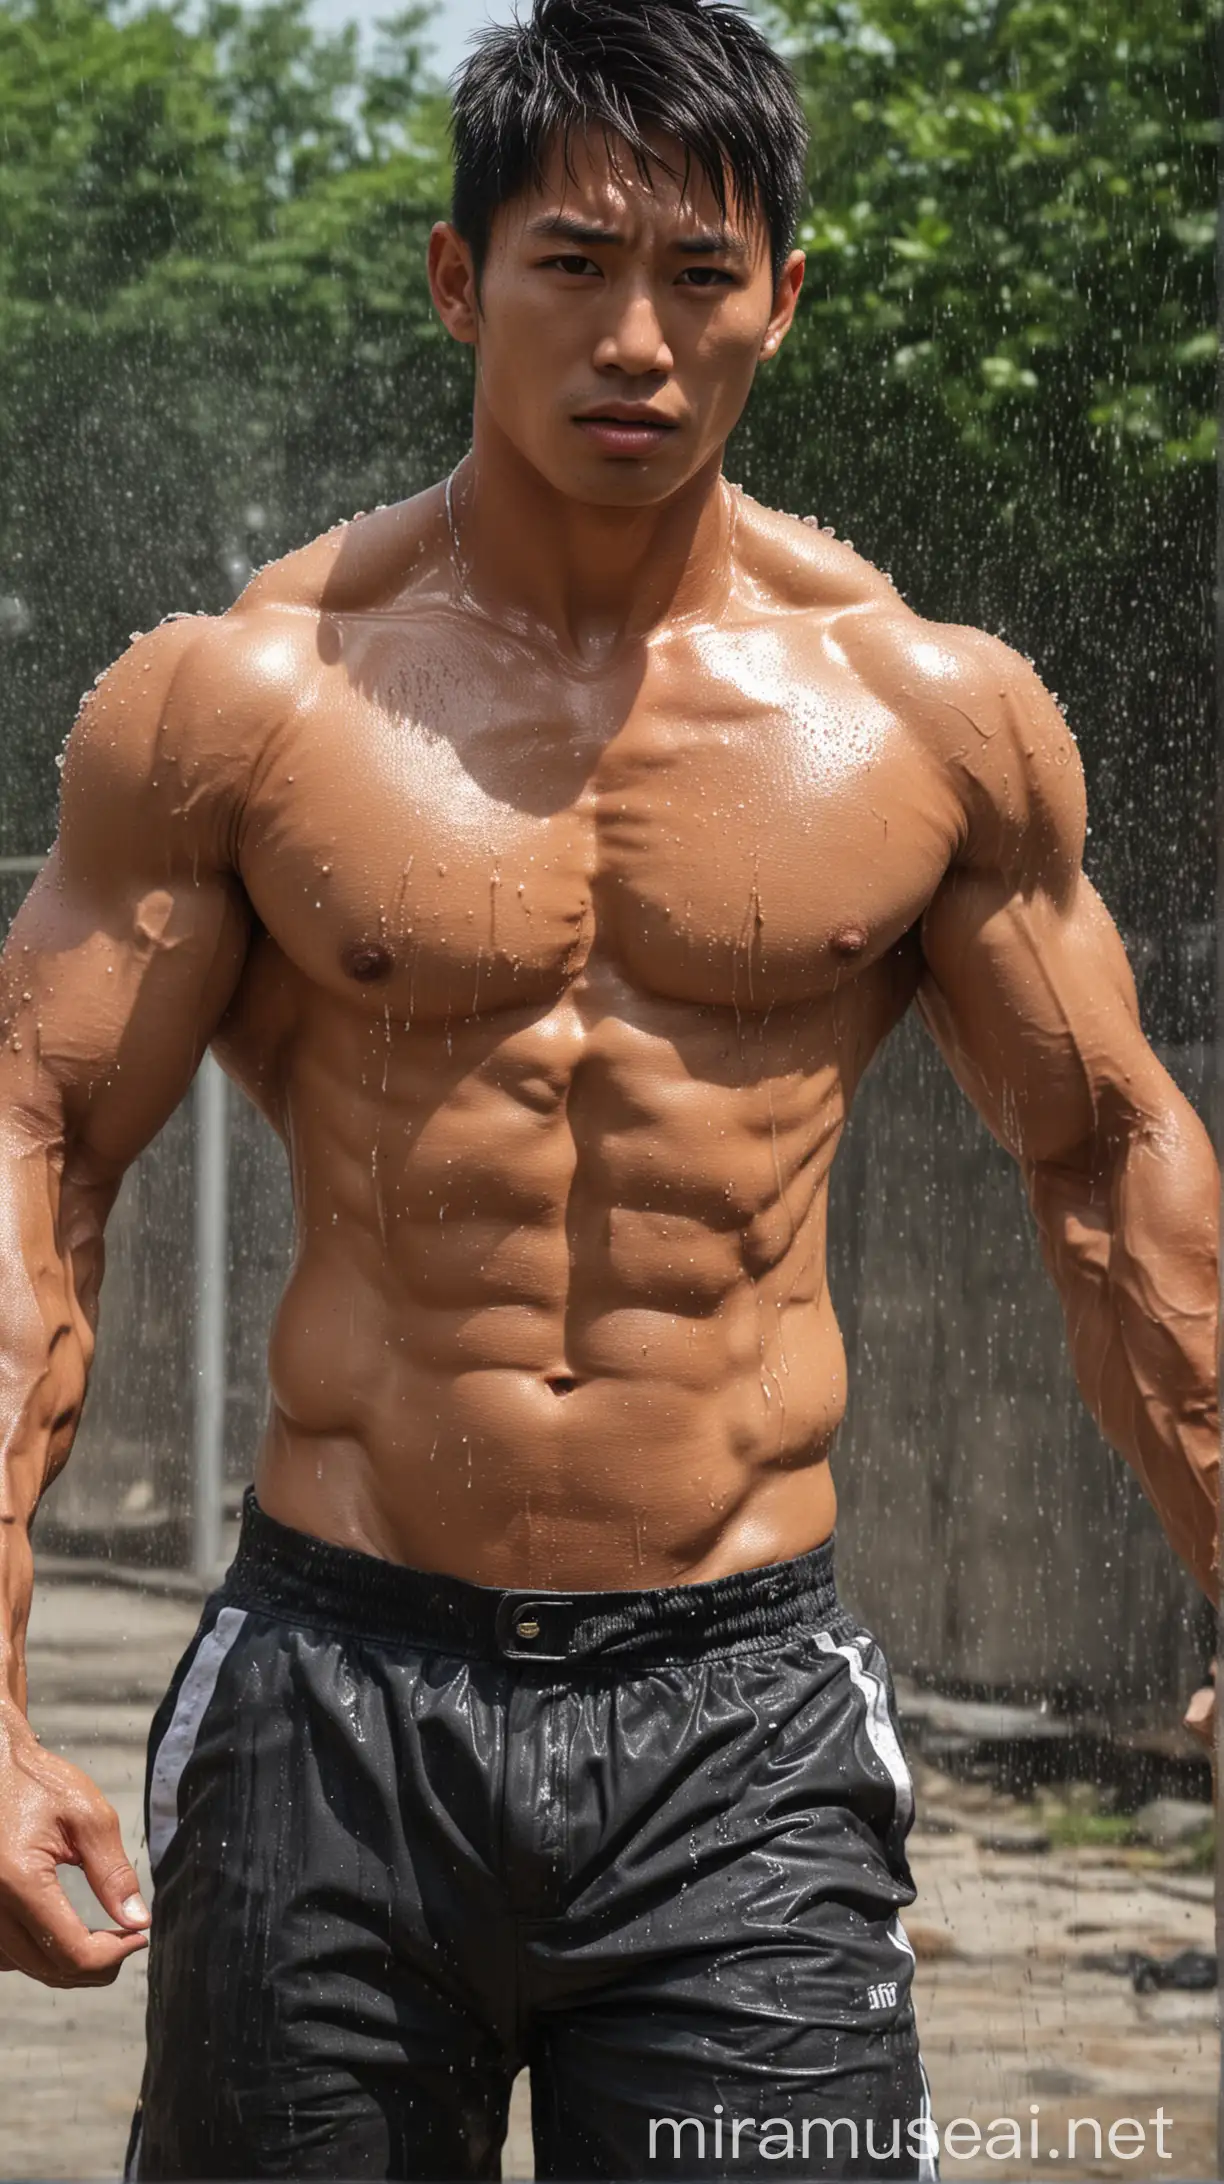 Sweating Asian Bodybuilder Model Under the Sun